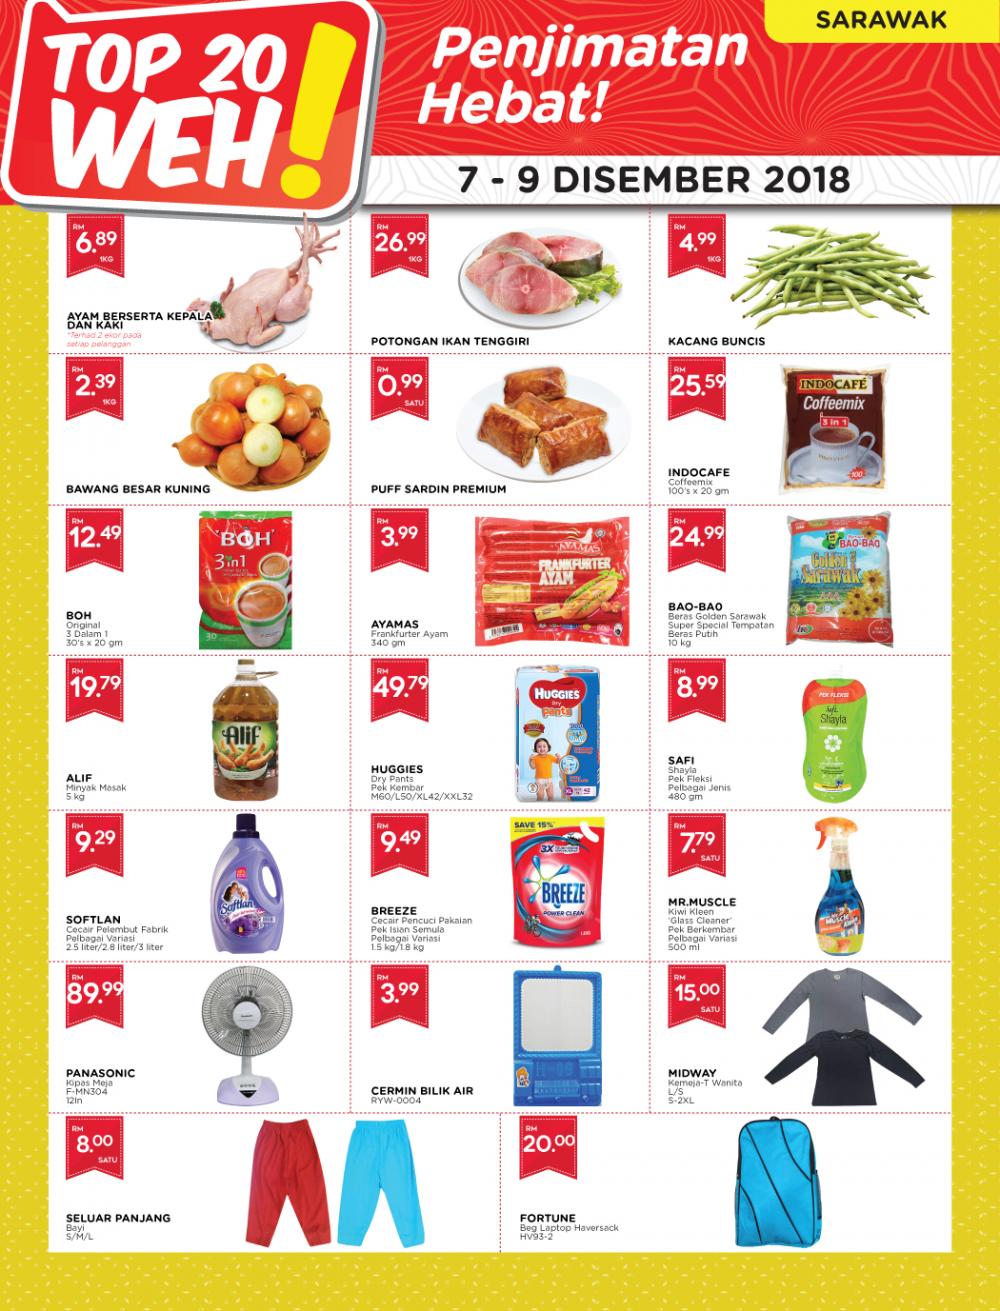 MYDIN TOP 20 WEH Promotion at Sarawak (7 December 2018 - 9 December 2018)